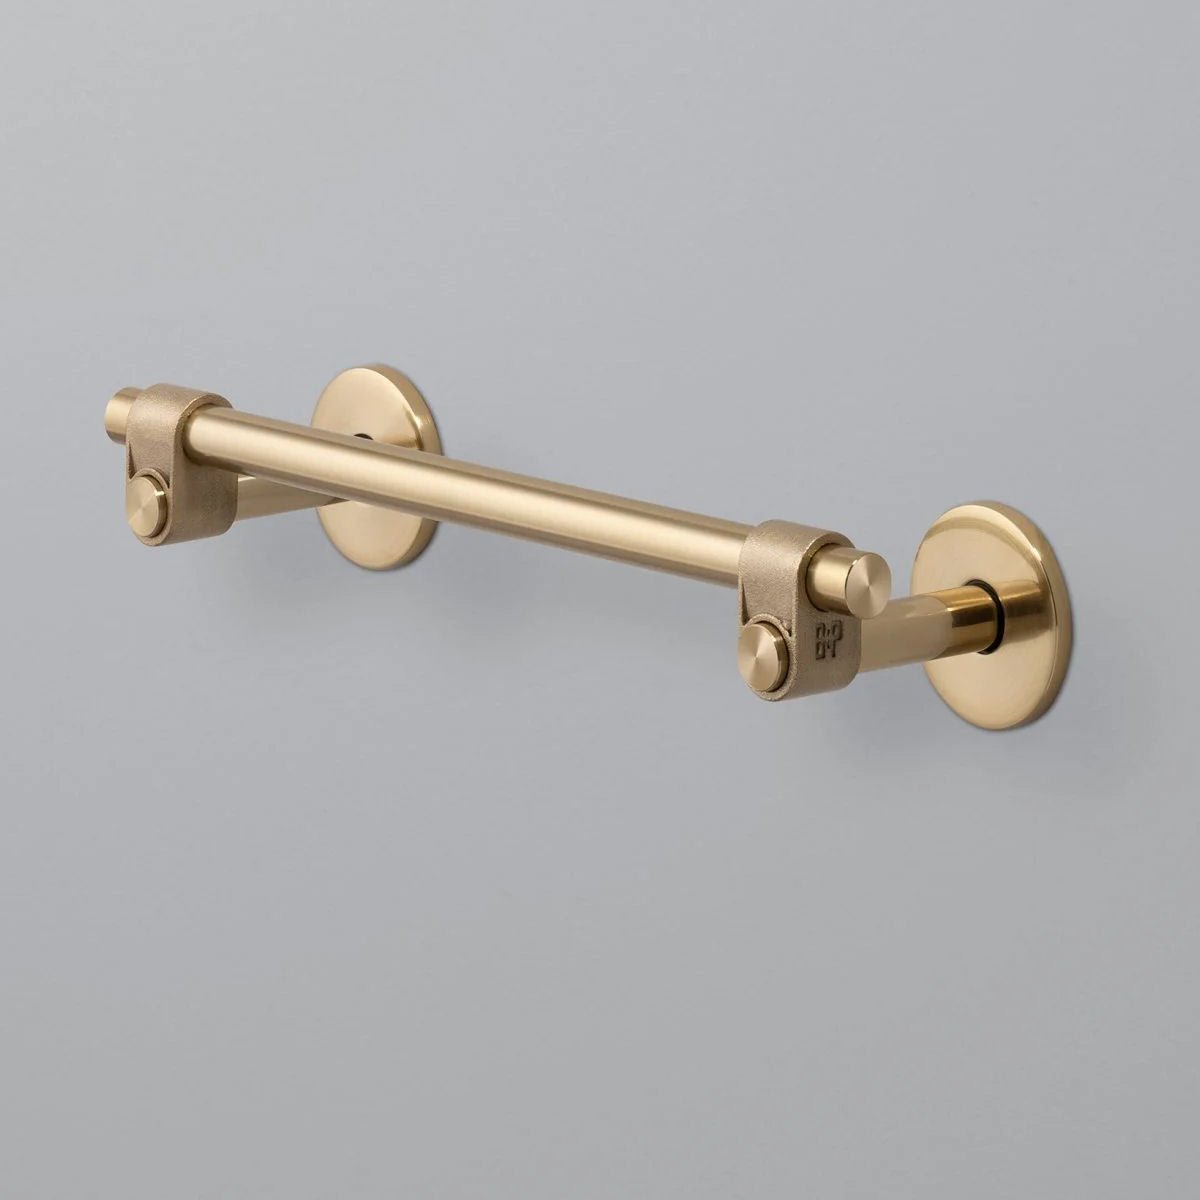 Industrial Towel Rail Holder / Brass - |VESIMI Design| Luxury and Rustic bathrooms online